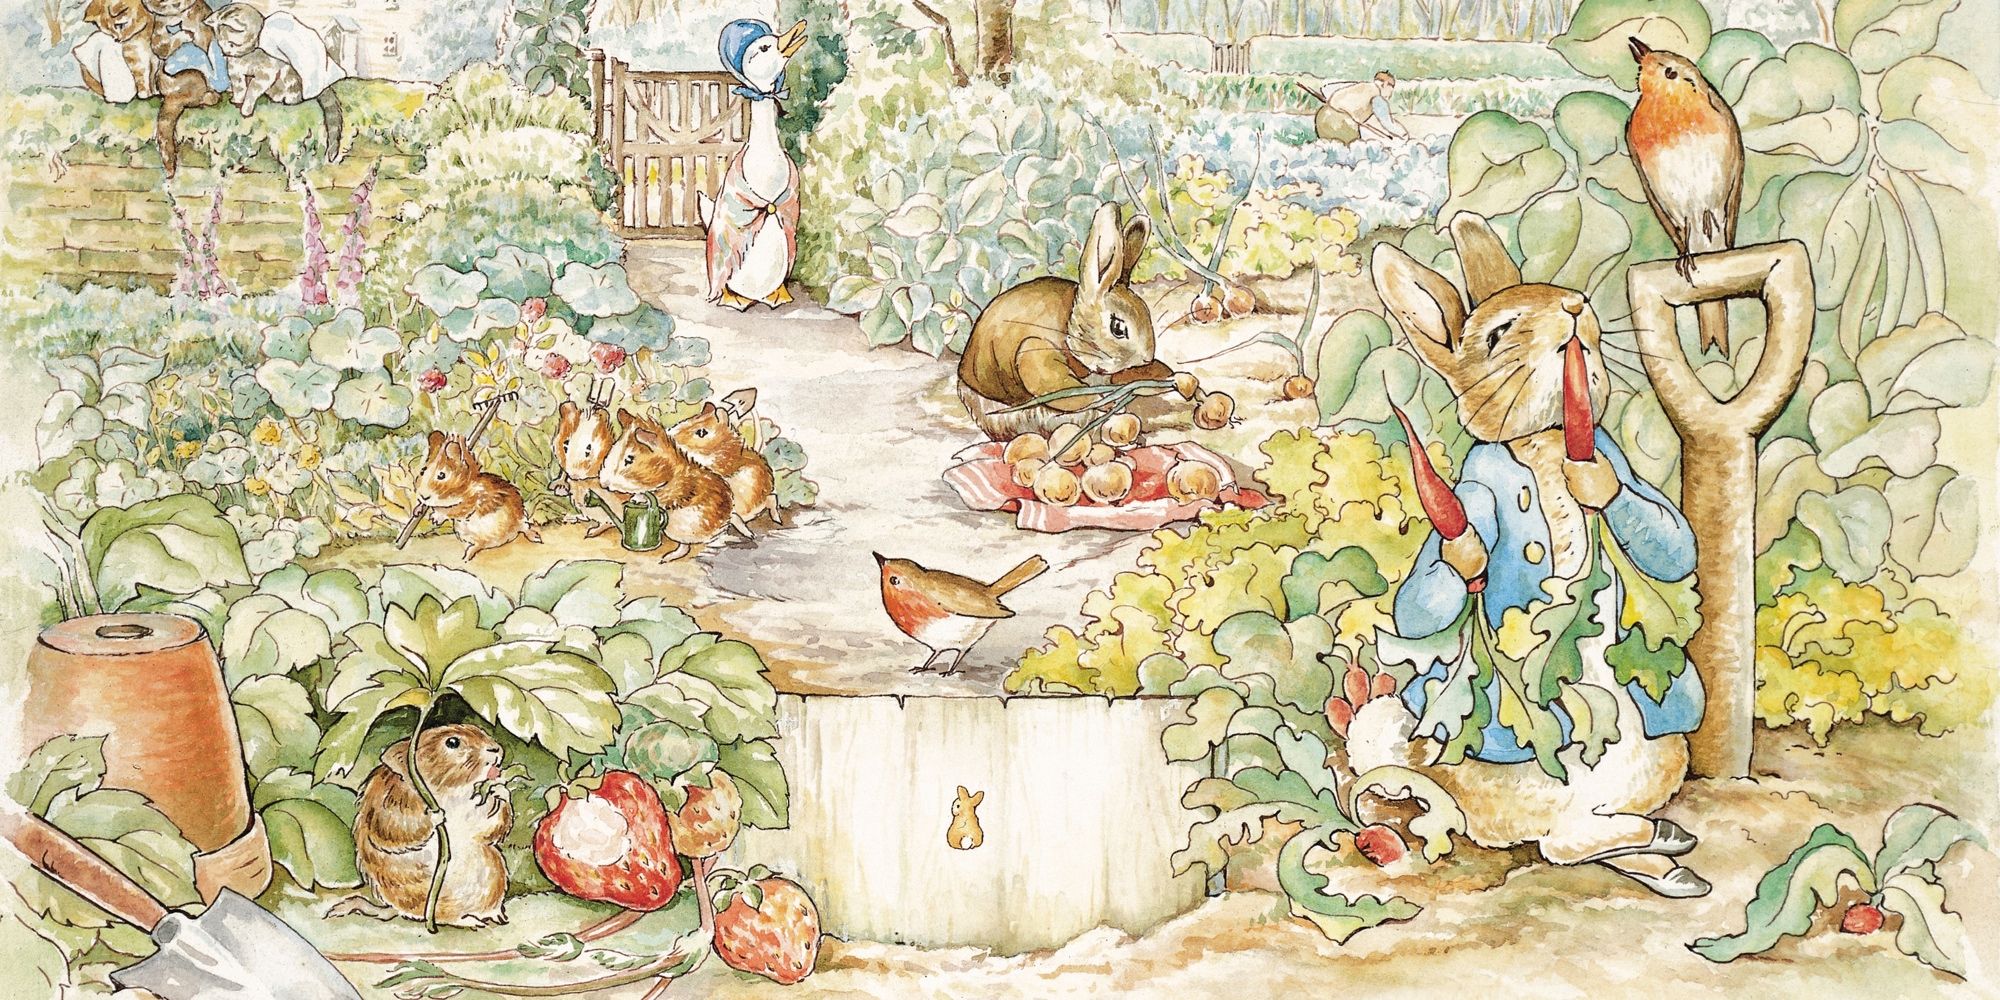 Peter Rabbit eating vegetables